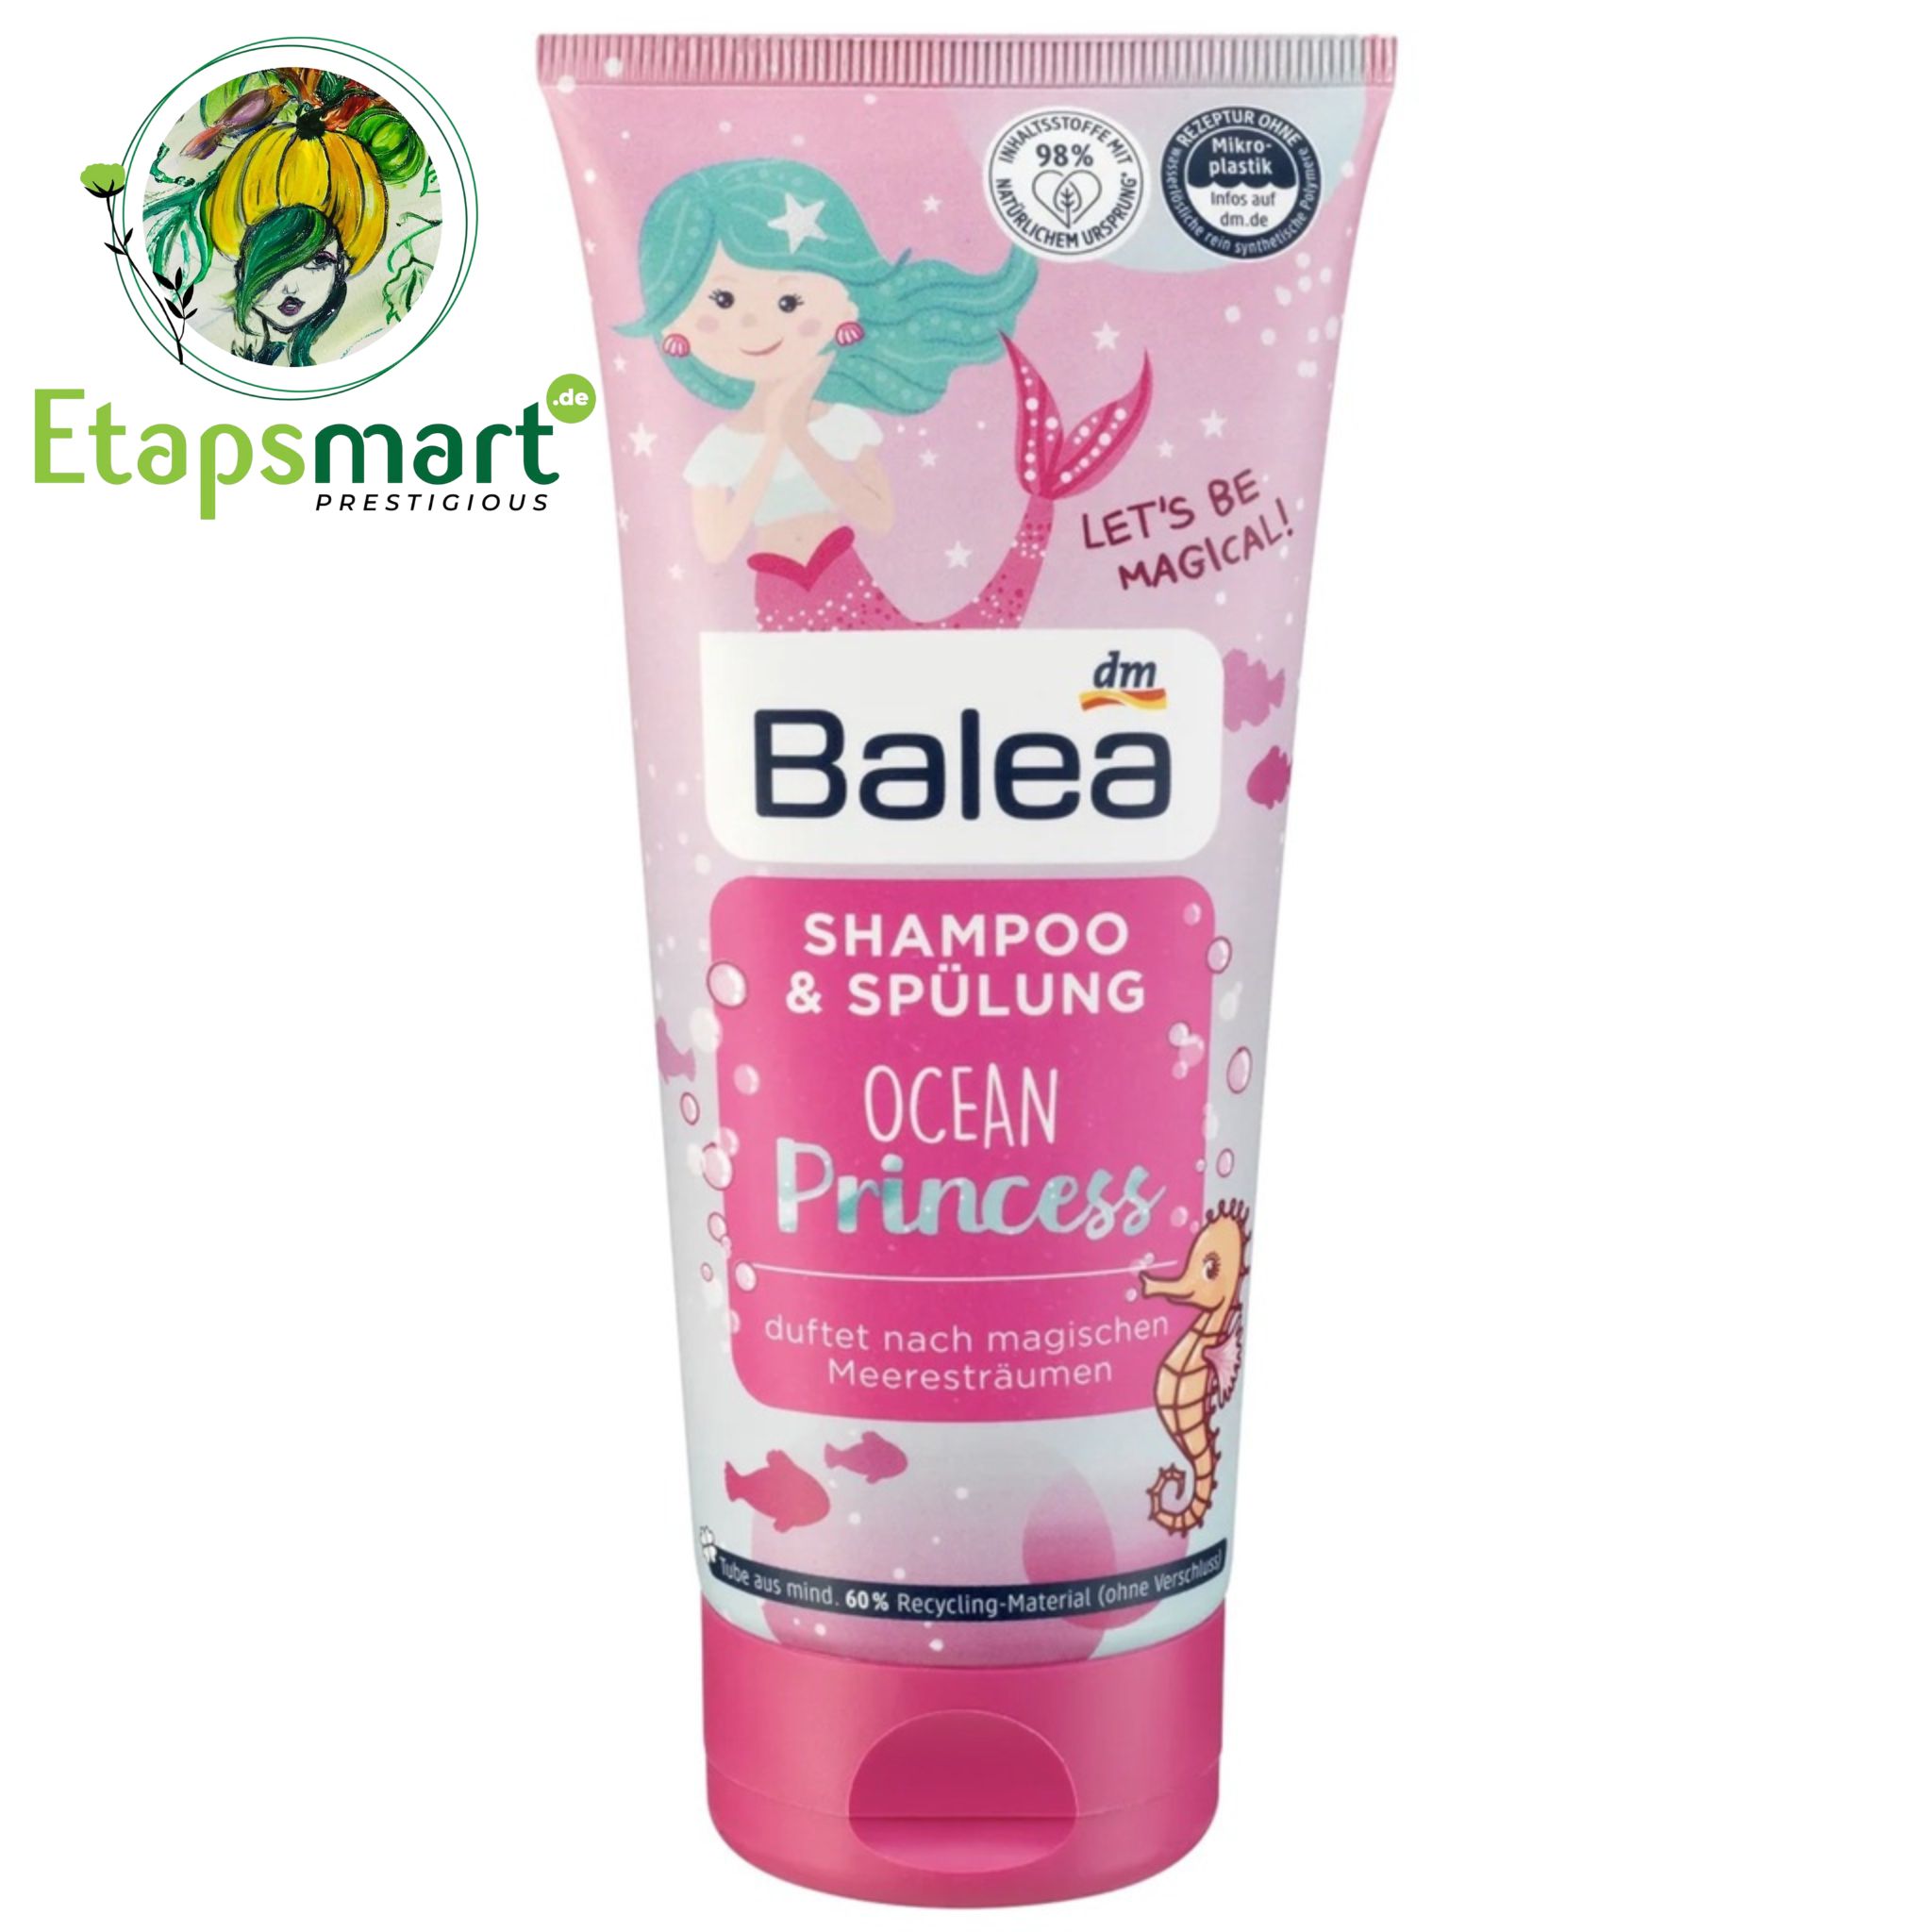 Gội xả Balea công chúa Shampoo & Spulung 200ml – Etapsmart